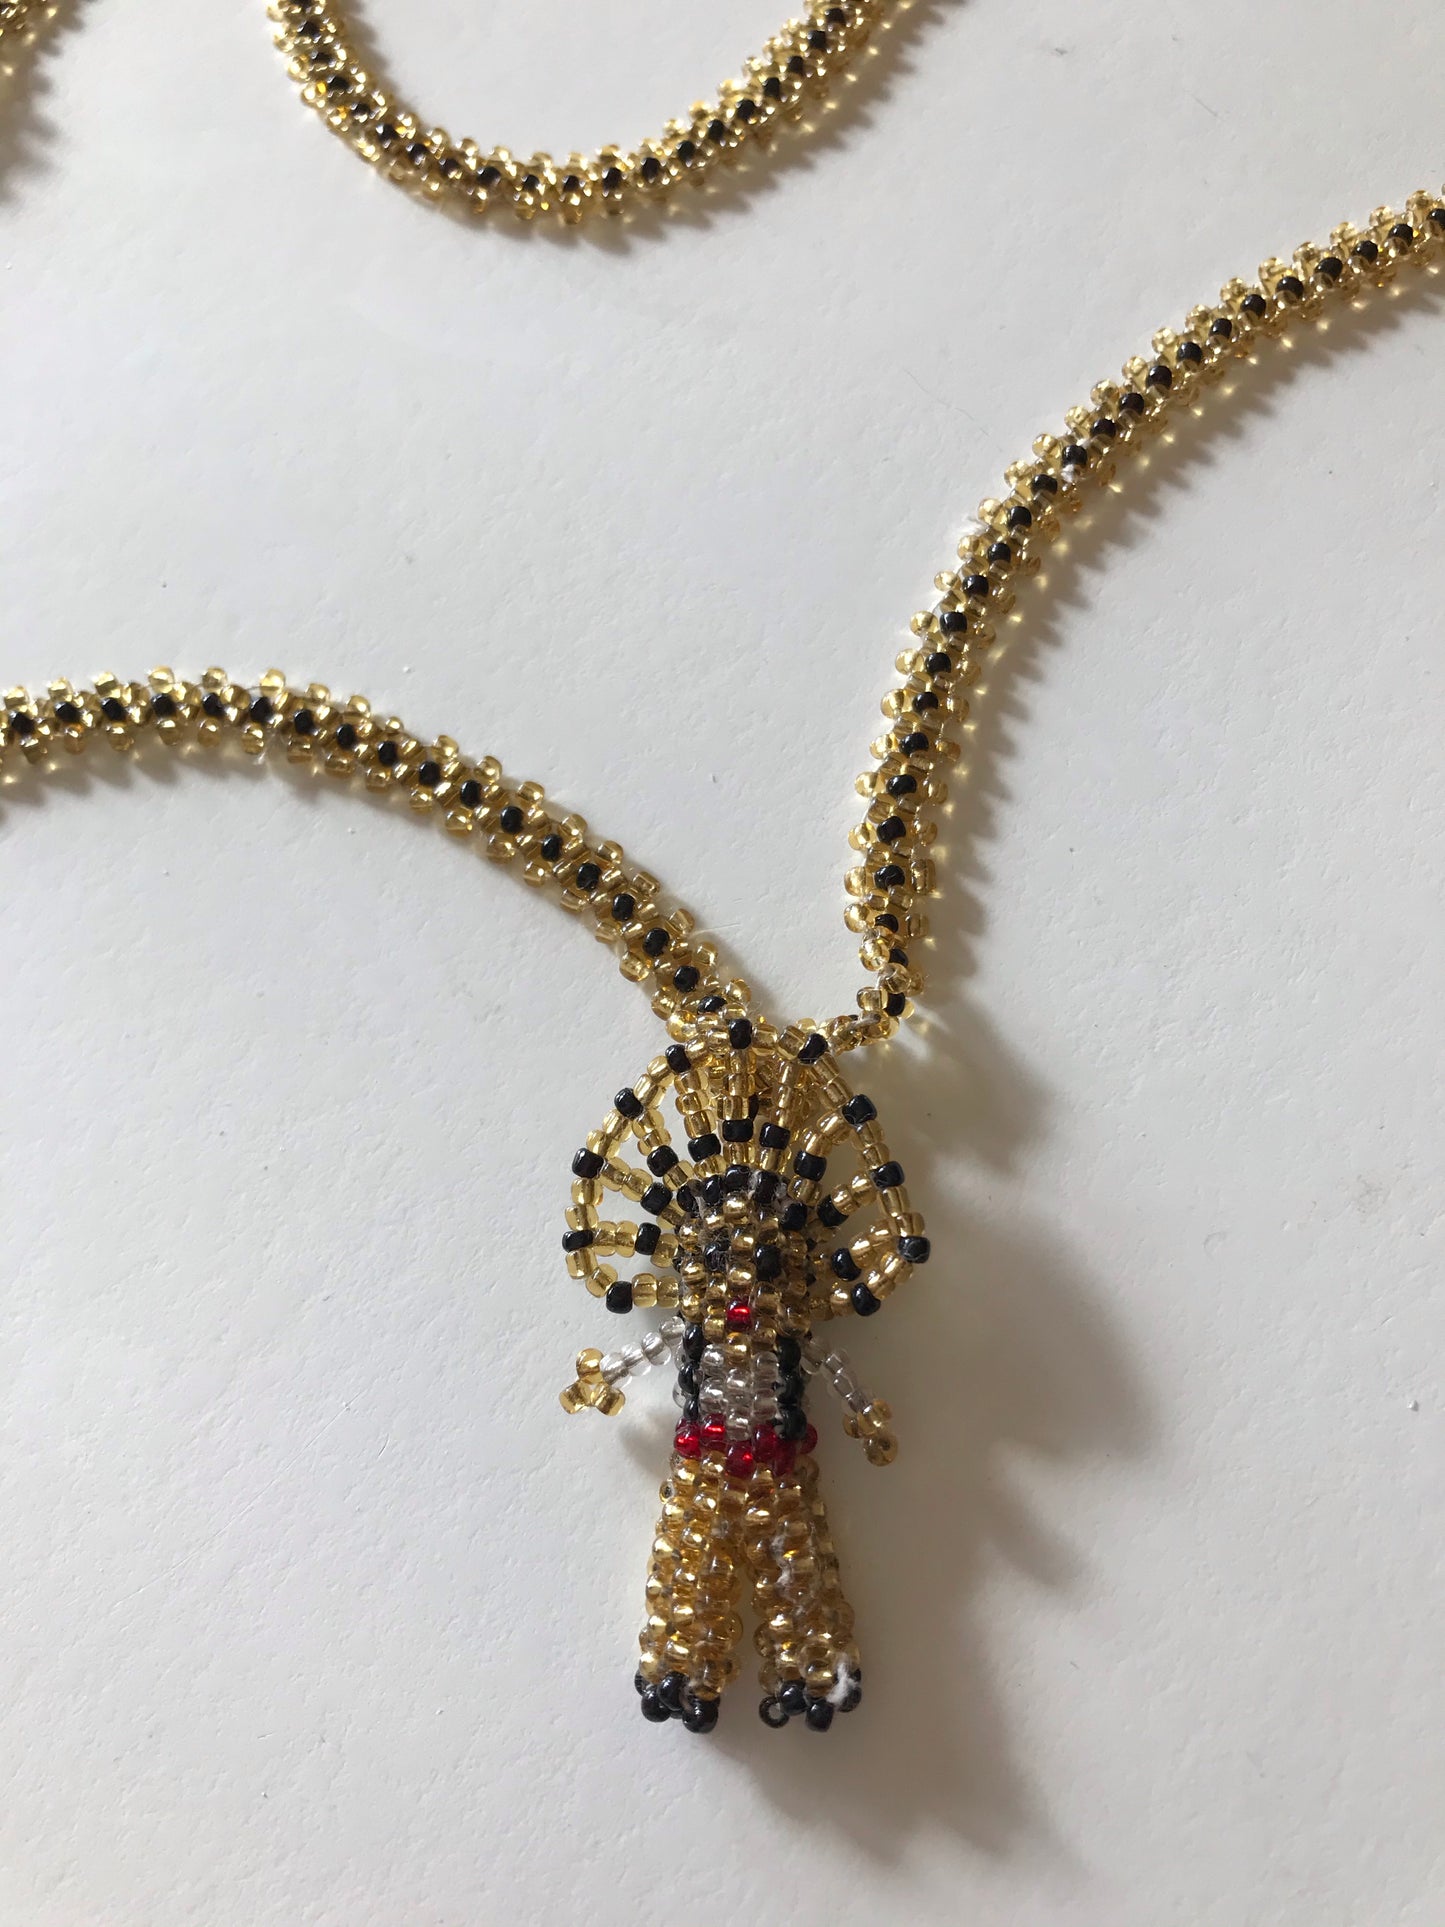 Beaded Native American Pendant Necklace circa 1960s